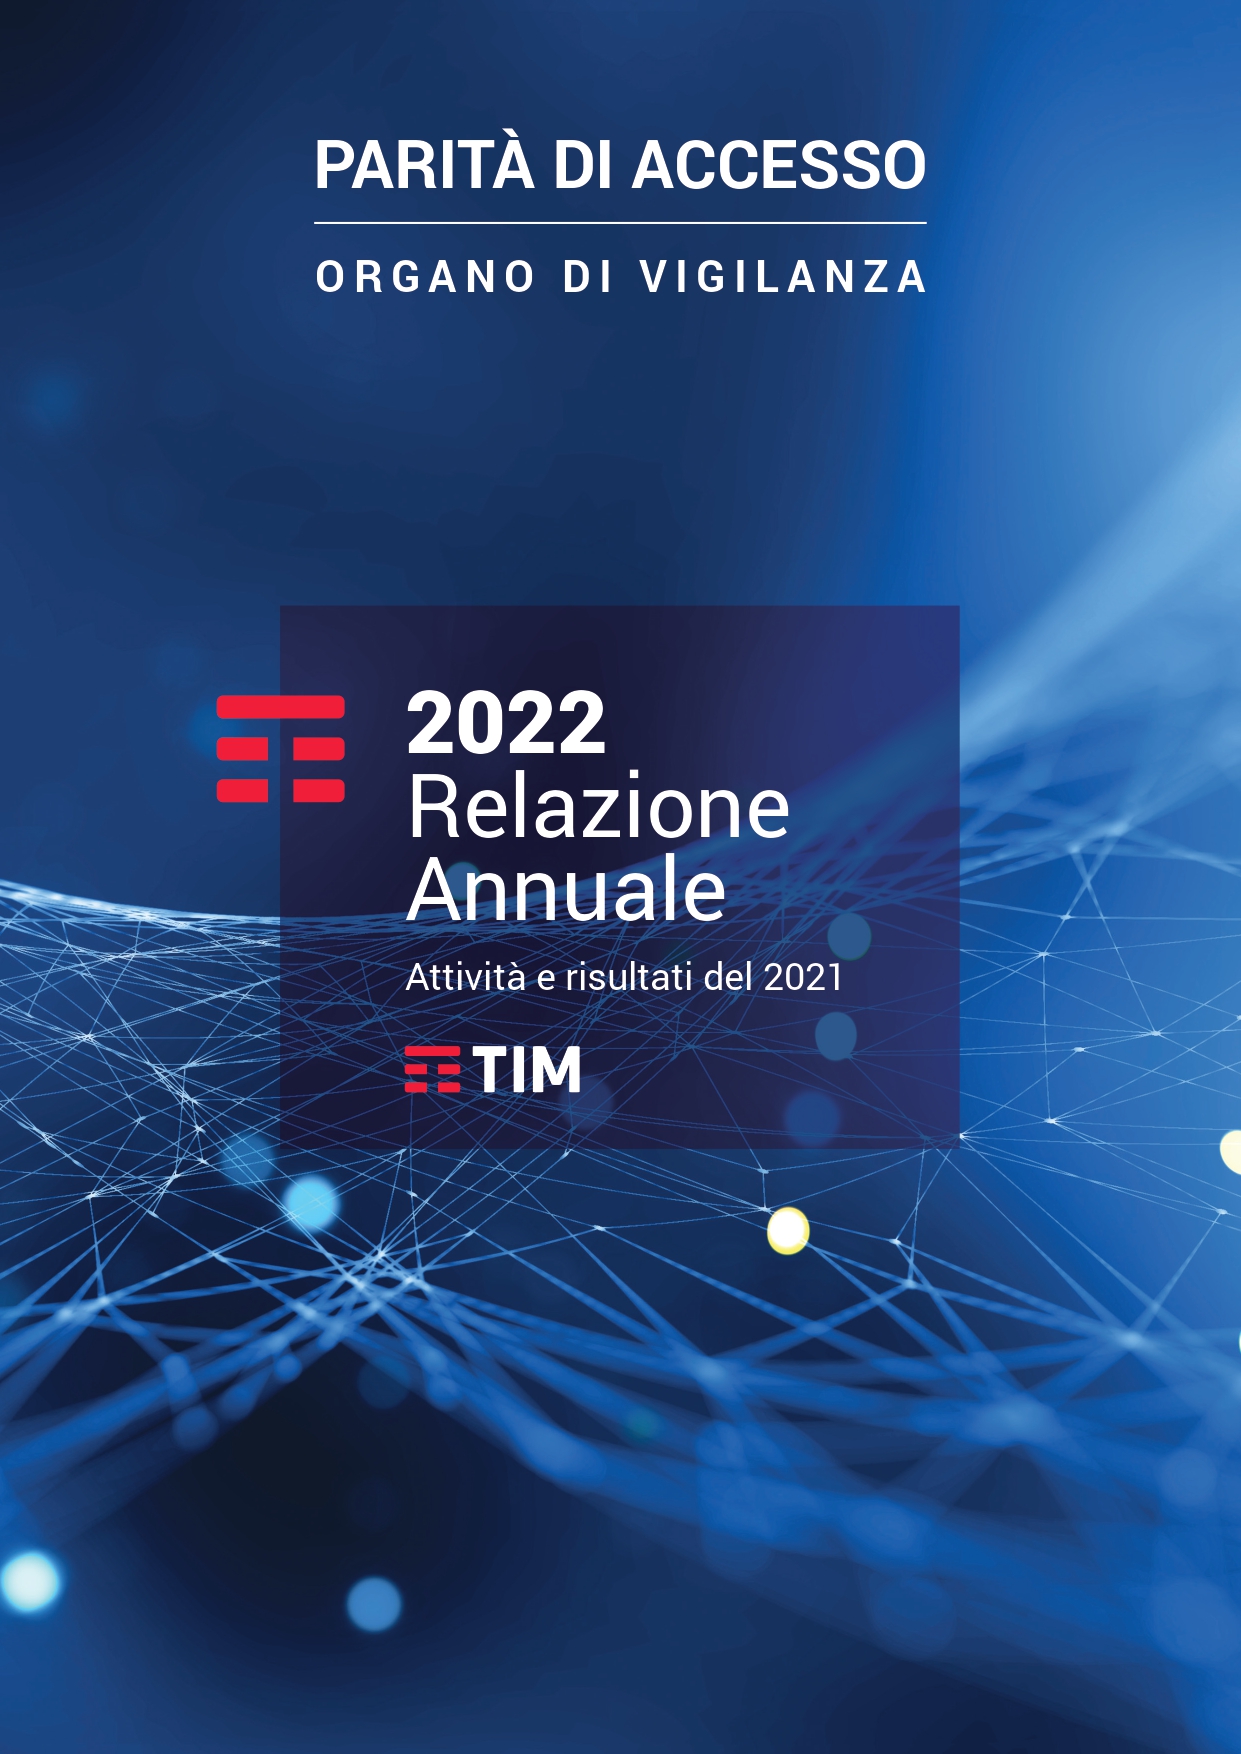 https://organodivigilanza.gruppotim.it/sites/default/files/images/Relazione Annuale 2020 (frontespizio).jpg